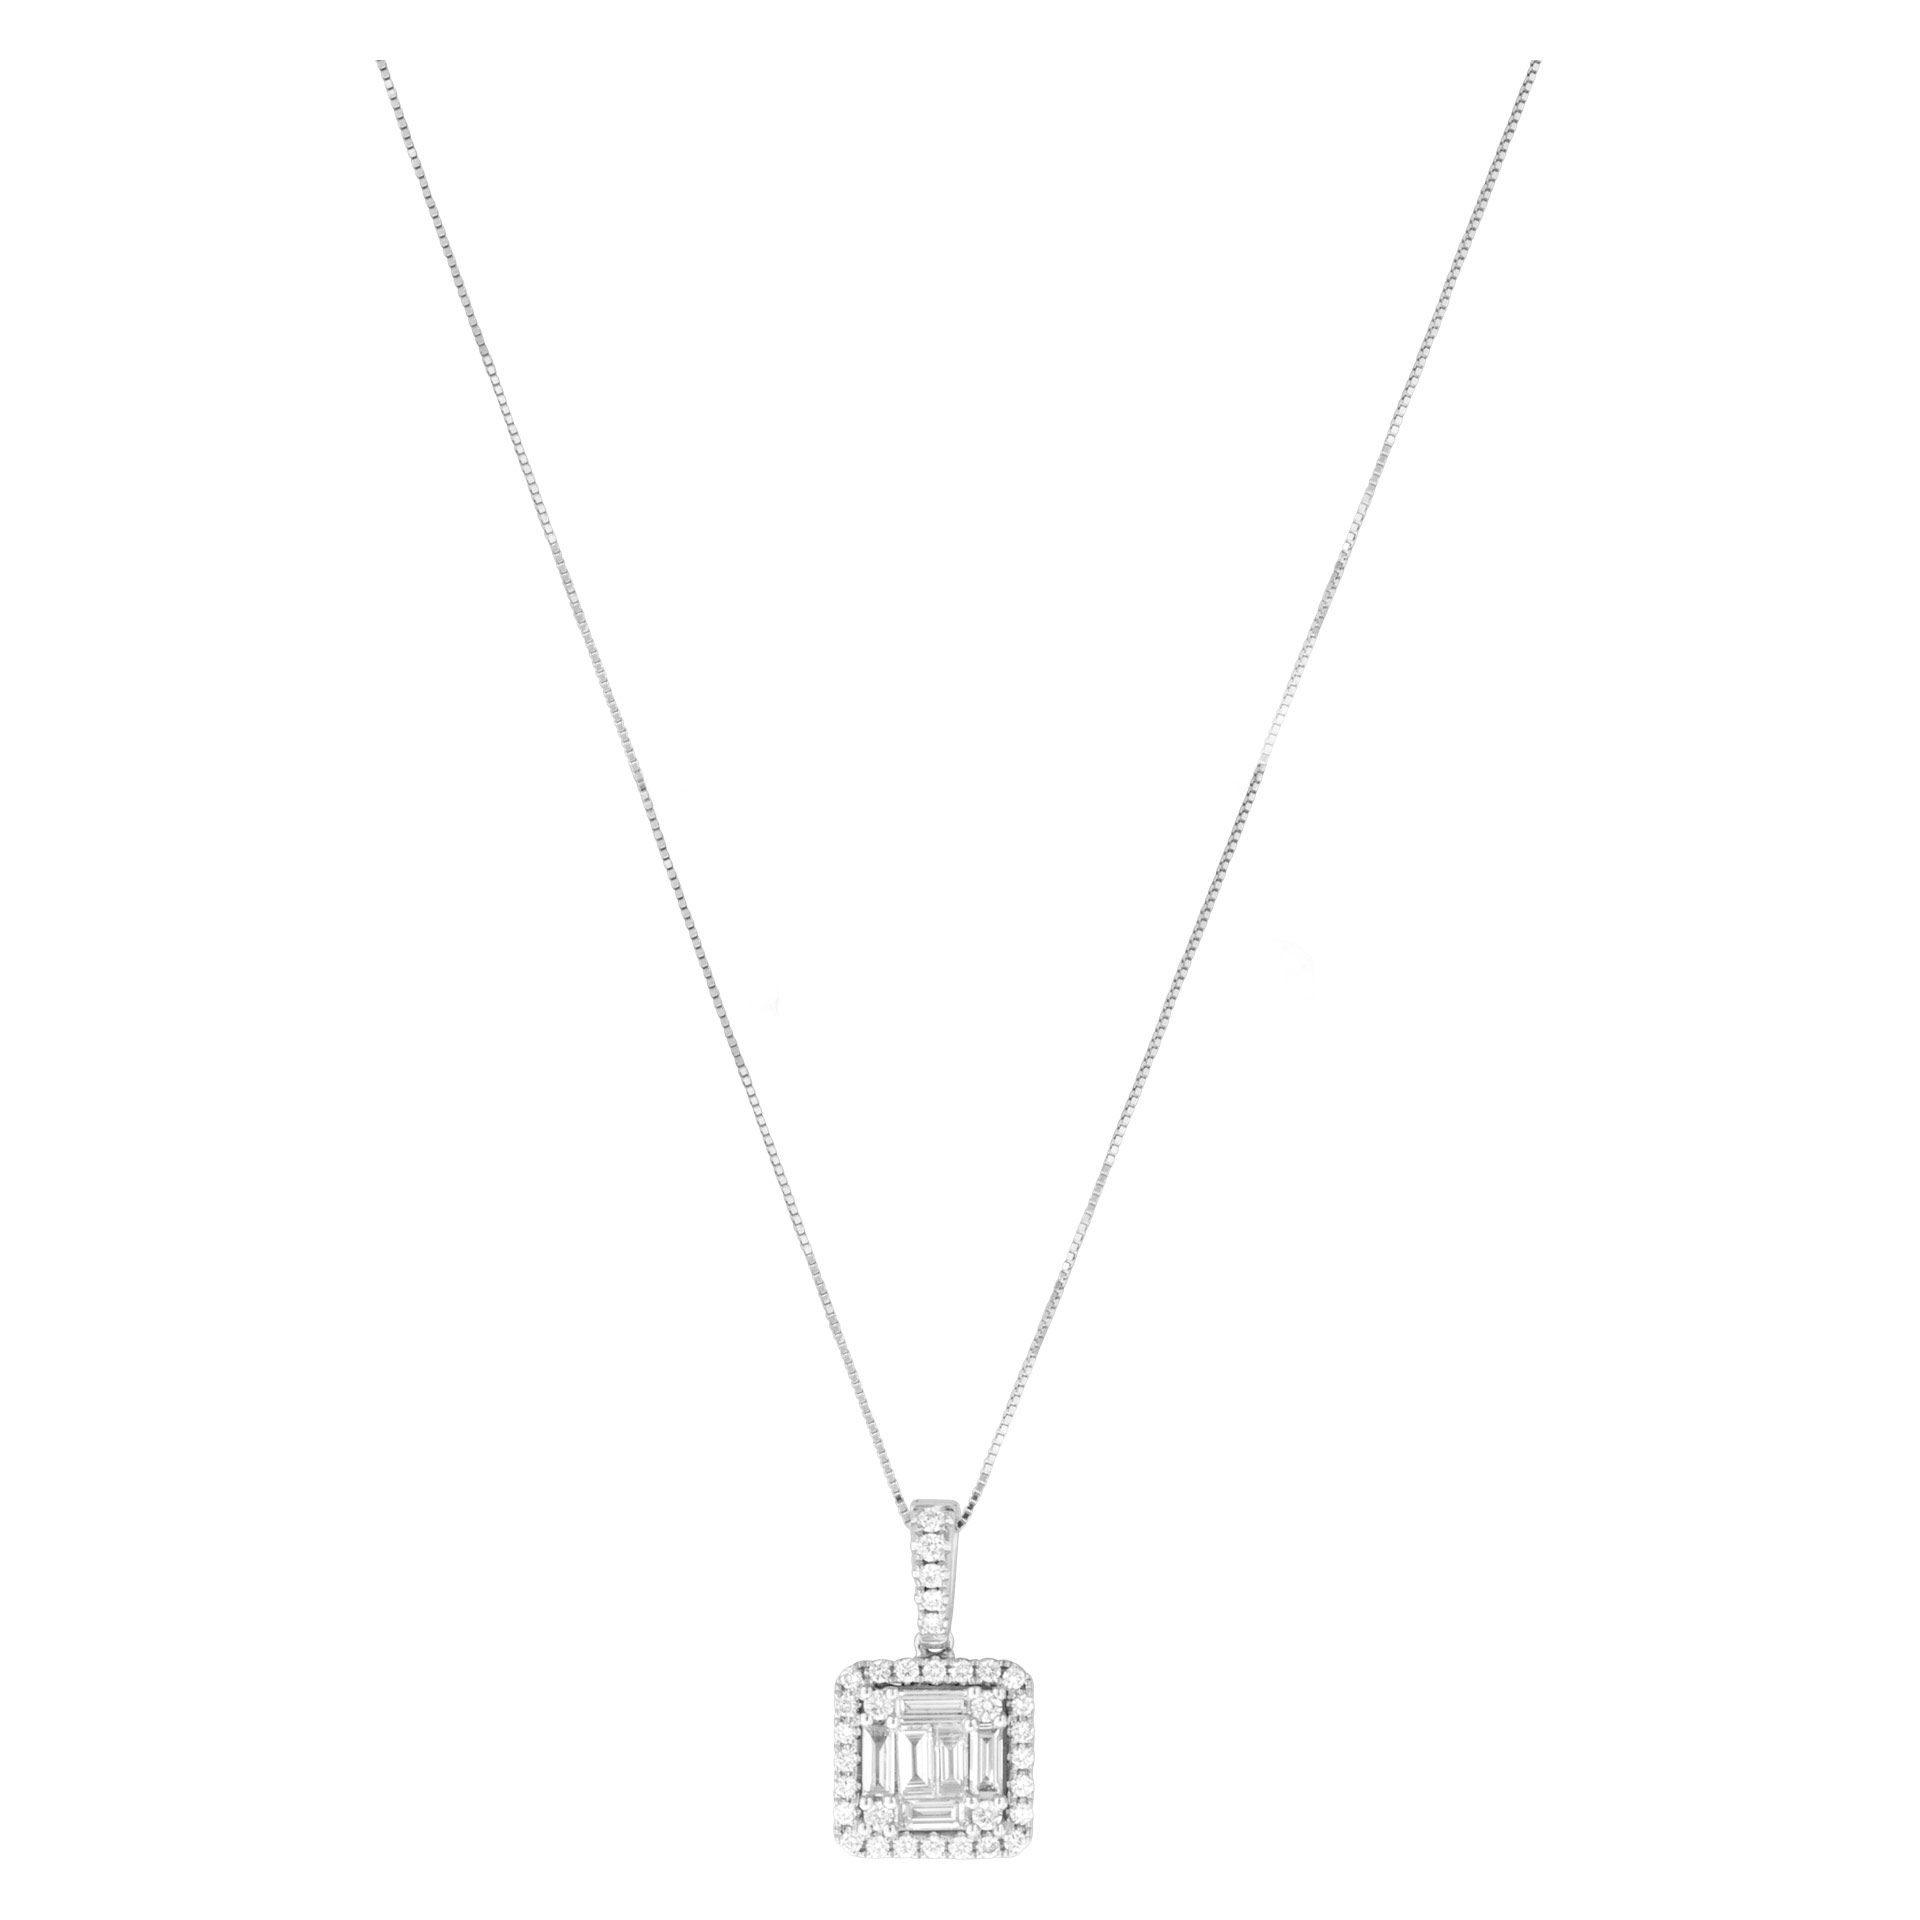 Diamond pendant on a thin 18k white gold chain. 0.76 carats in diamonds